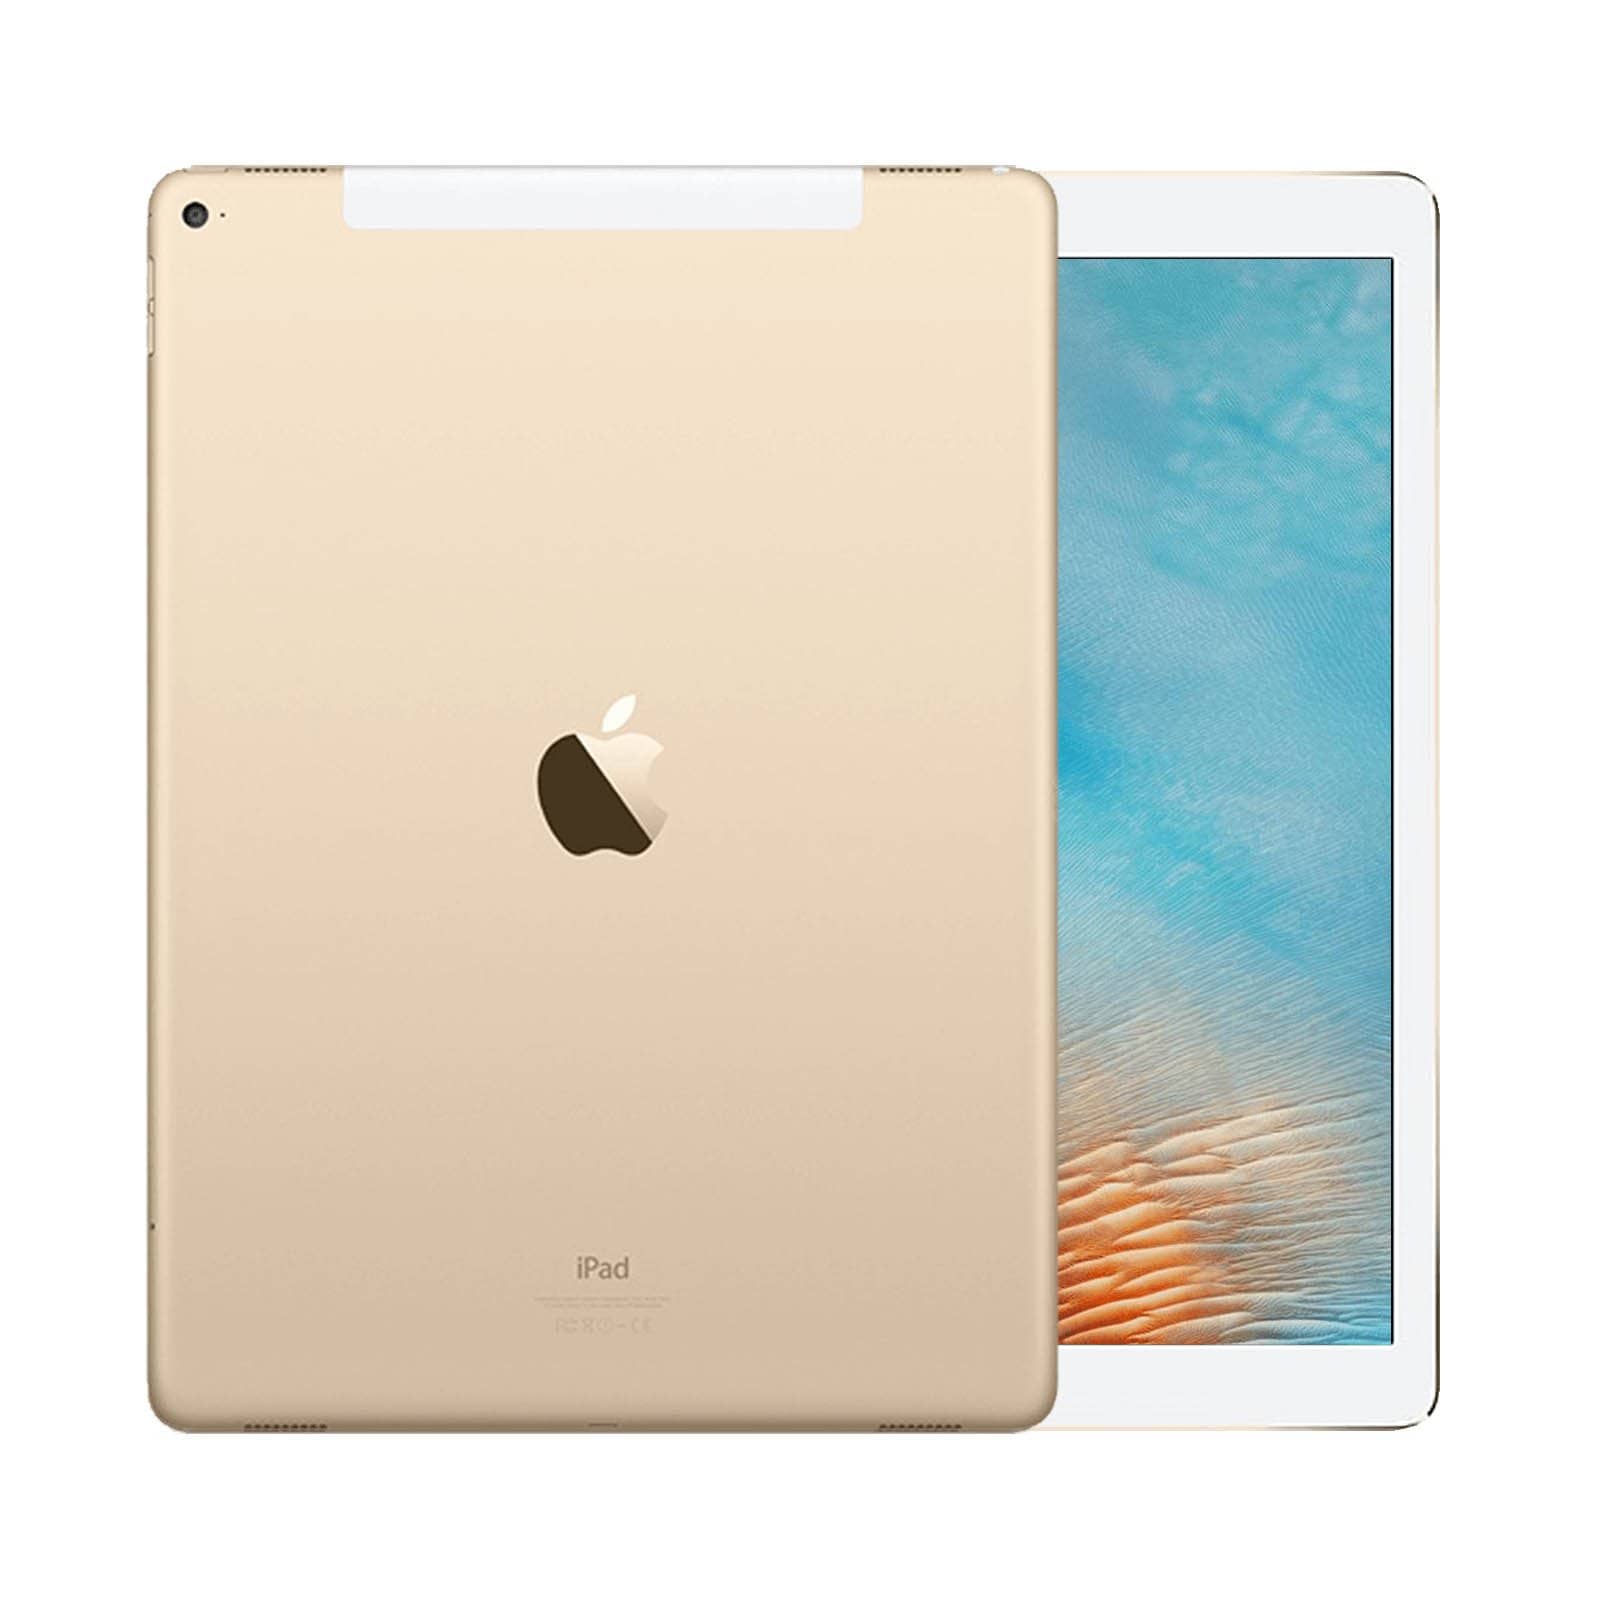 iPad Pro 12.9 Inch 2nd Gen 64GB Gold Very Good - WiFi 64GB Gold Very Good